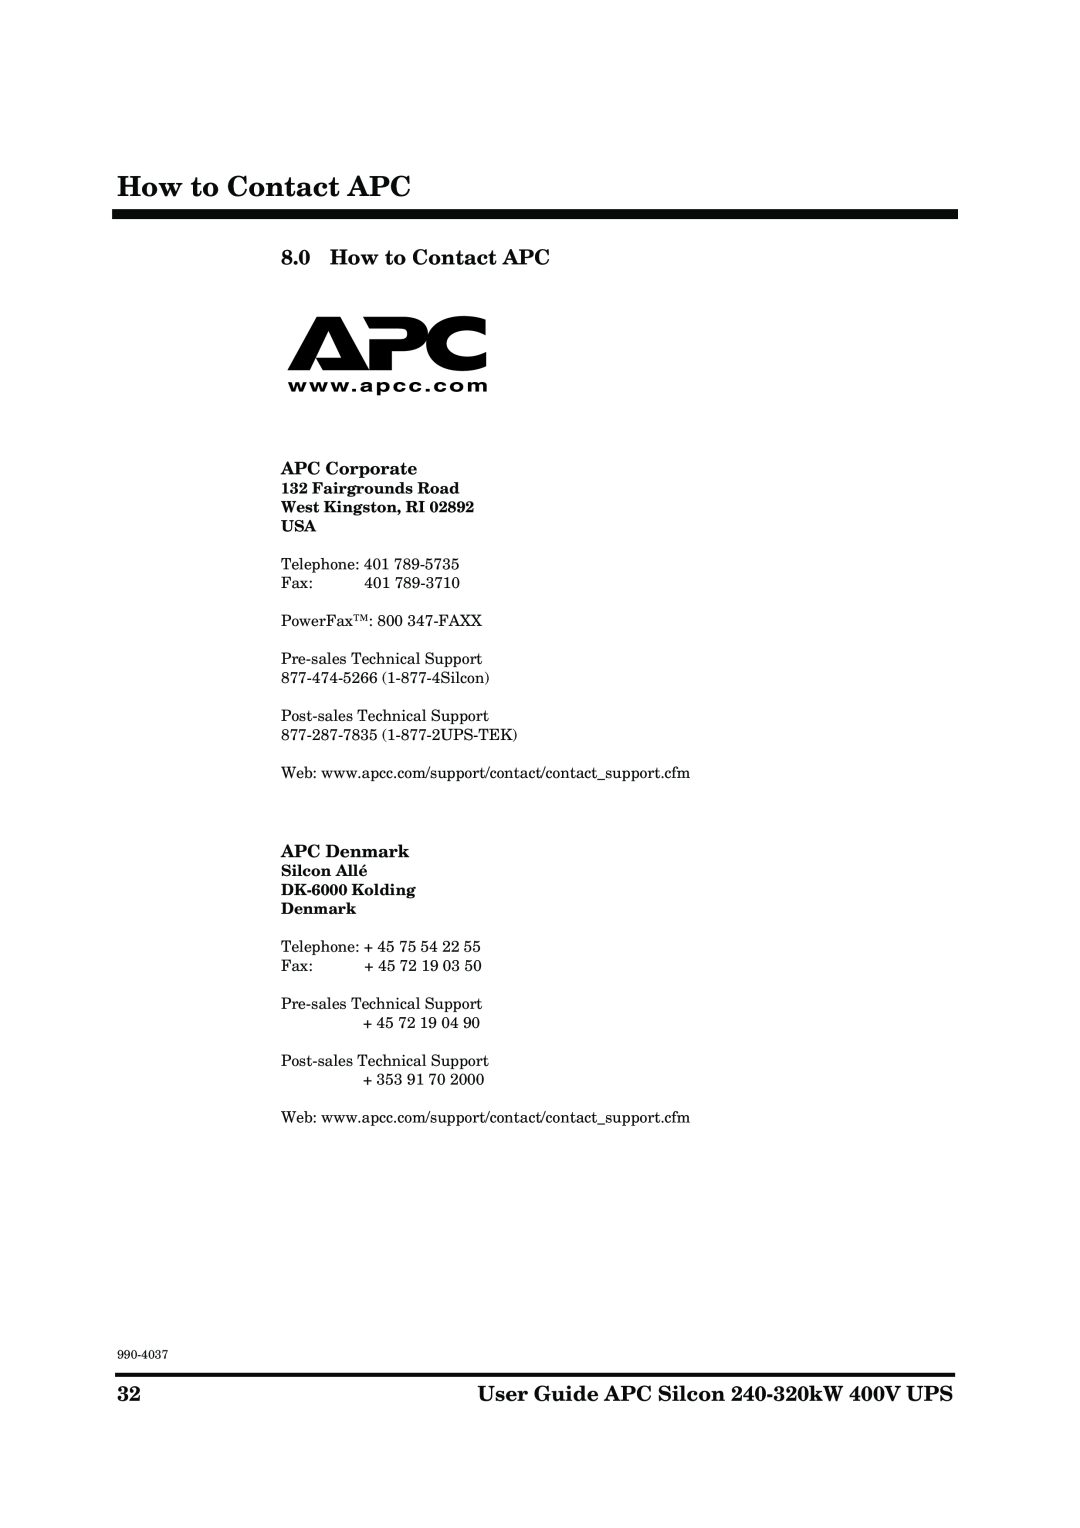 American Power Conversion APC Silcon 240-320kW 400V manual How to Contact APC, APC Corporate, APC Denmark 